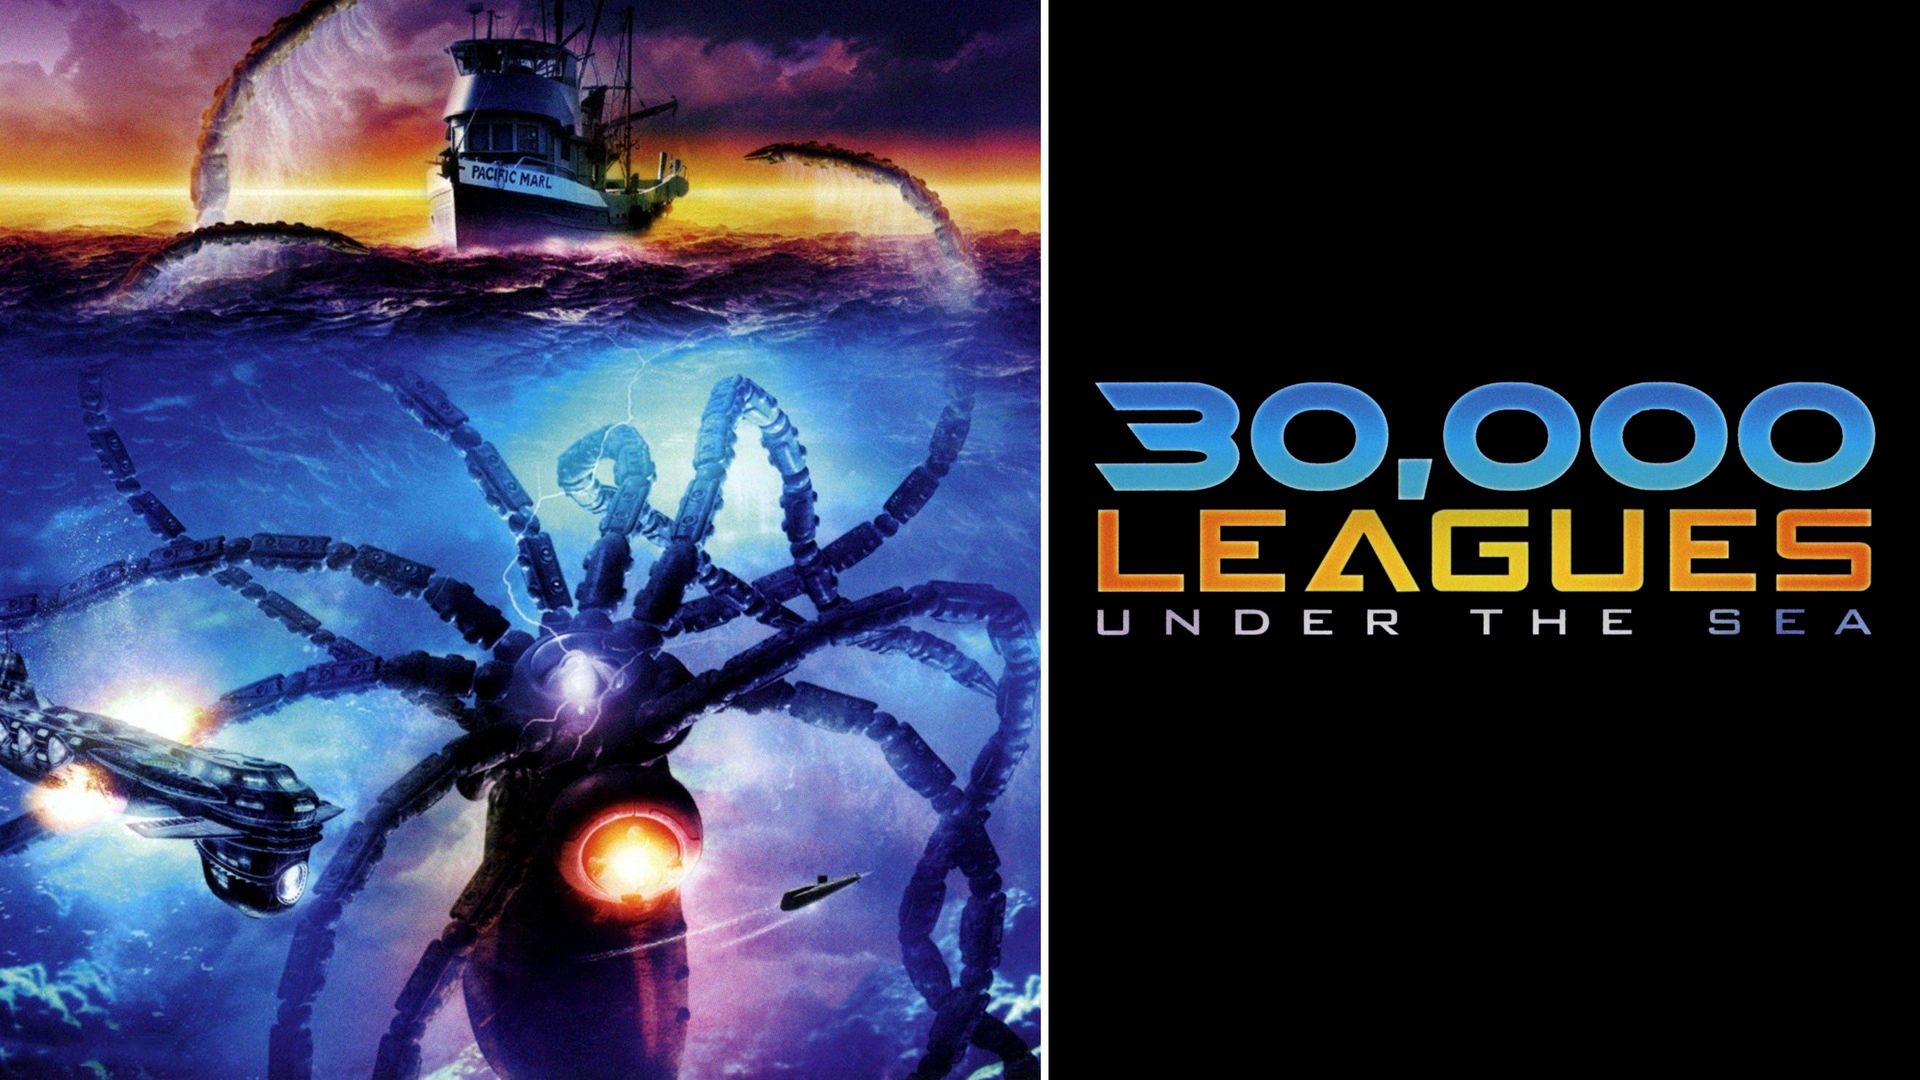 30,000 Leagues Under the Sea Backdrop